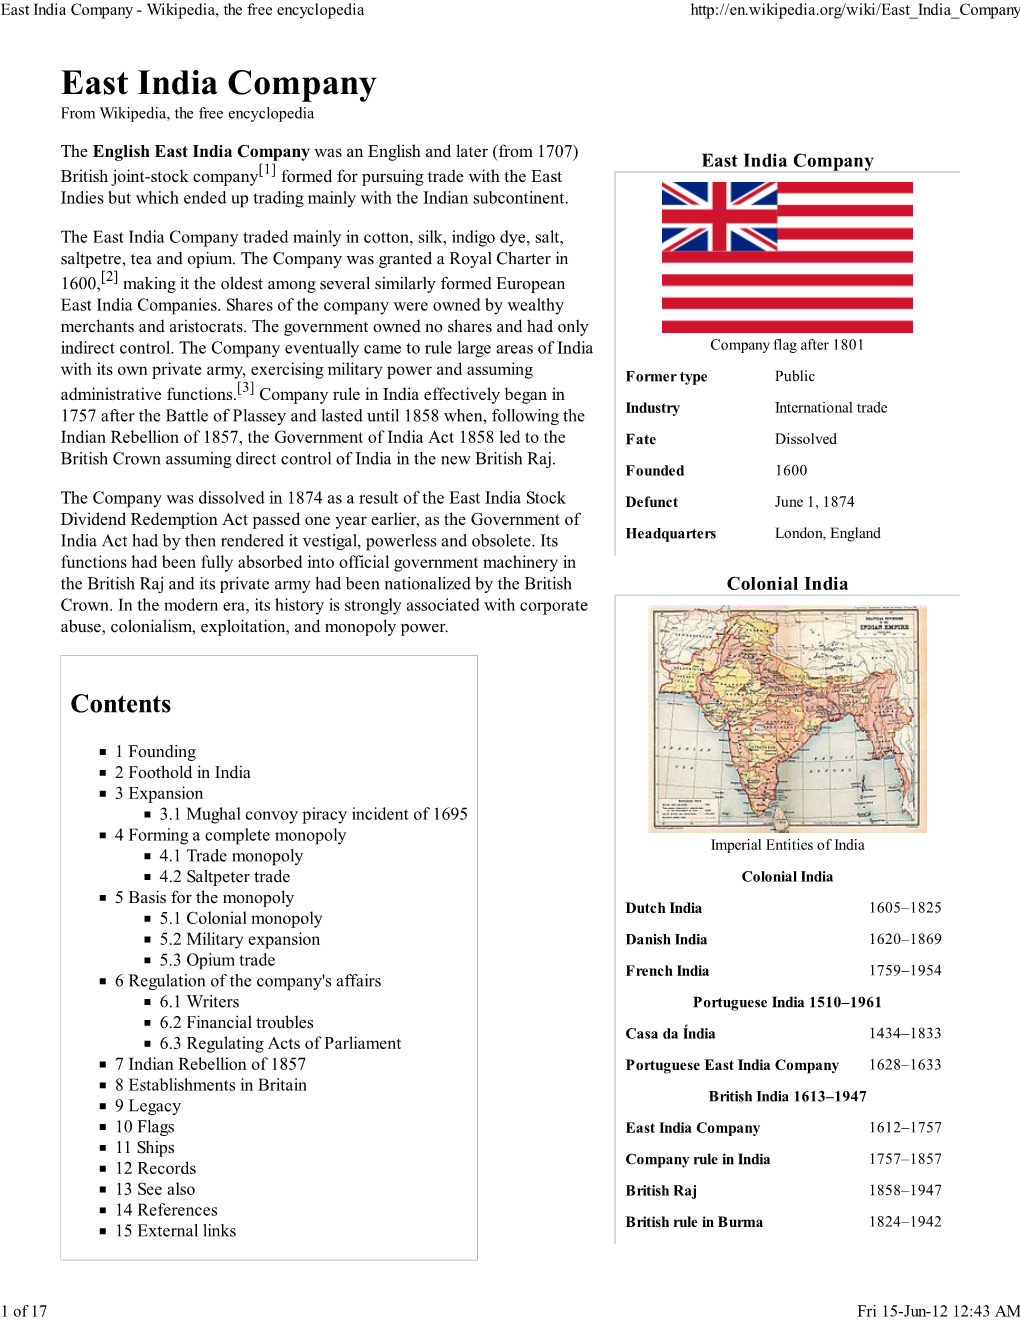 East India Company - Wikipedia, the Free Encyclopedia